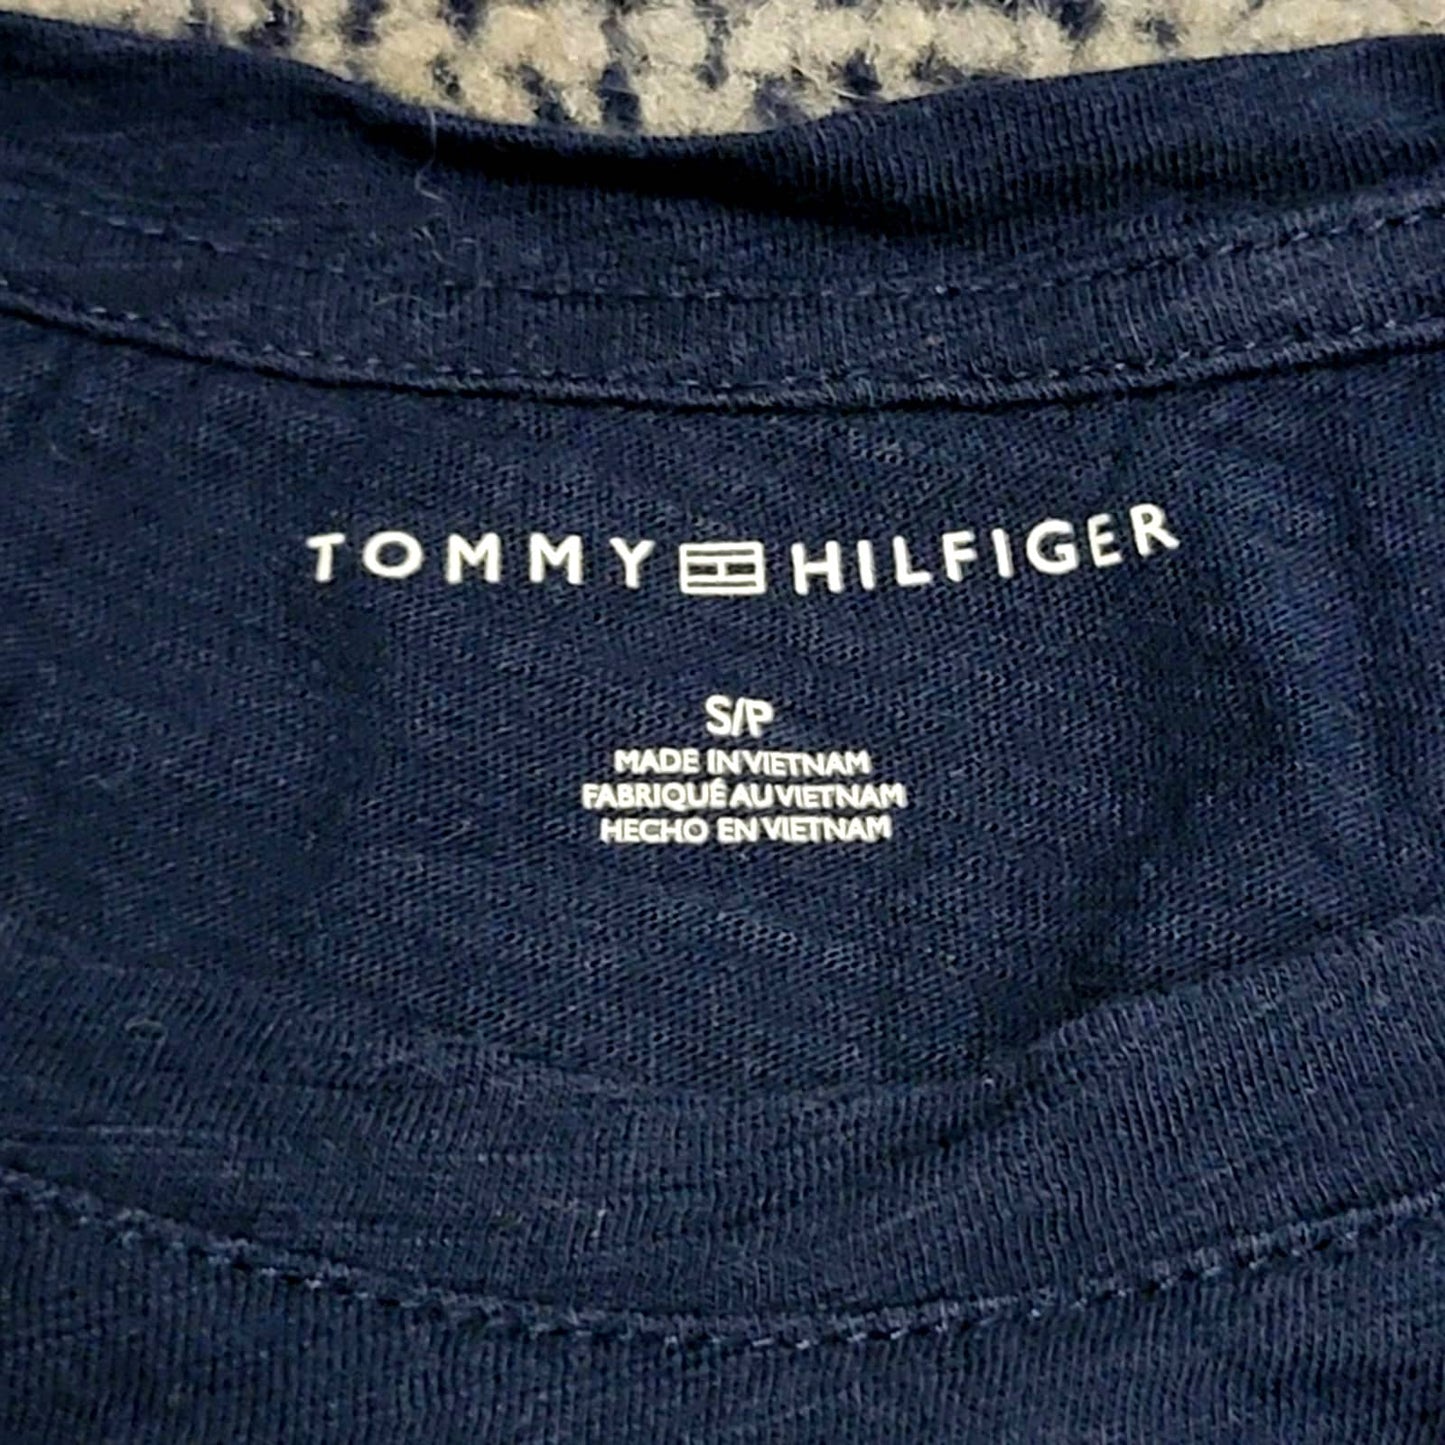 Crop Top Tommy Hilfiger Classic Logo Tee Shirt - S